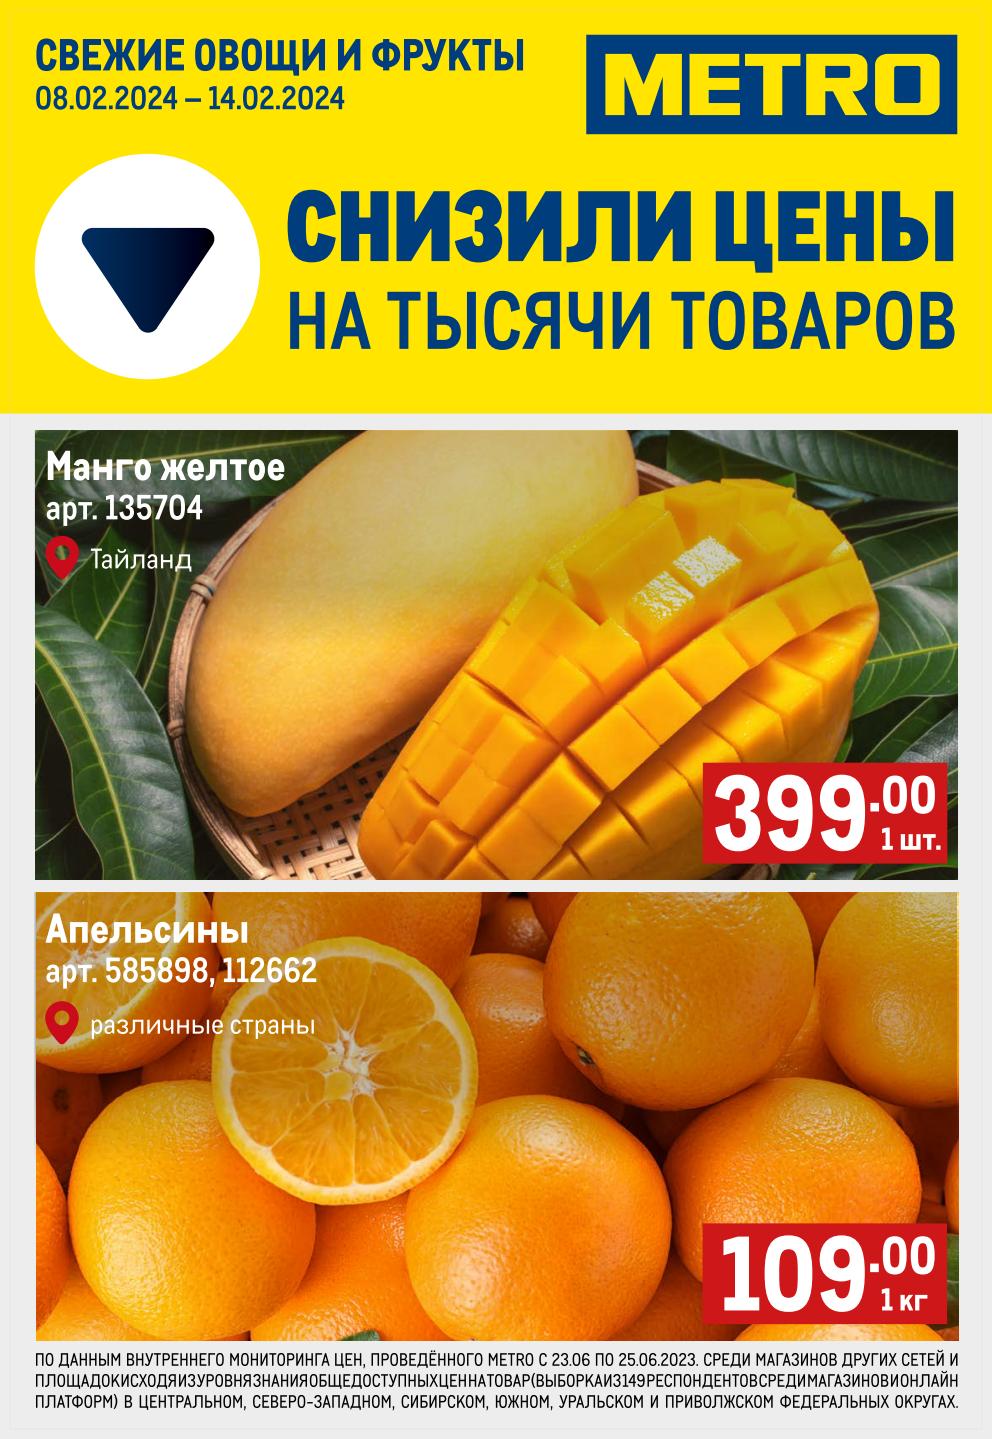 манго желтое тайланд 399 руб., 1 шт., апельсины 109 руб., 1 кг.